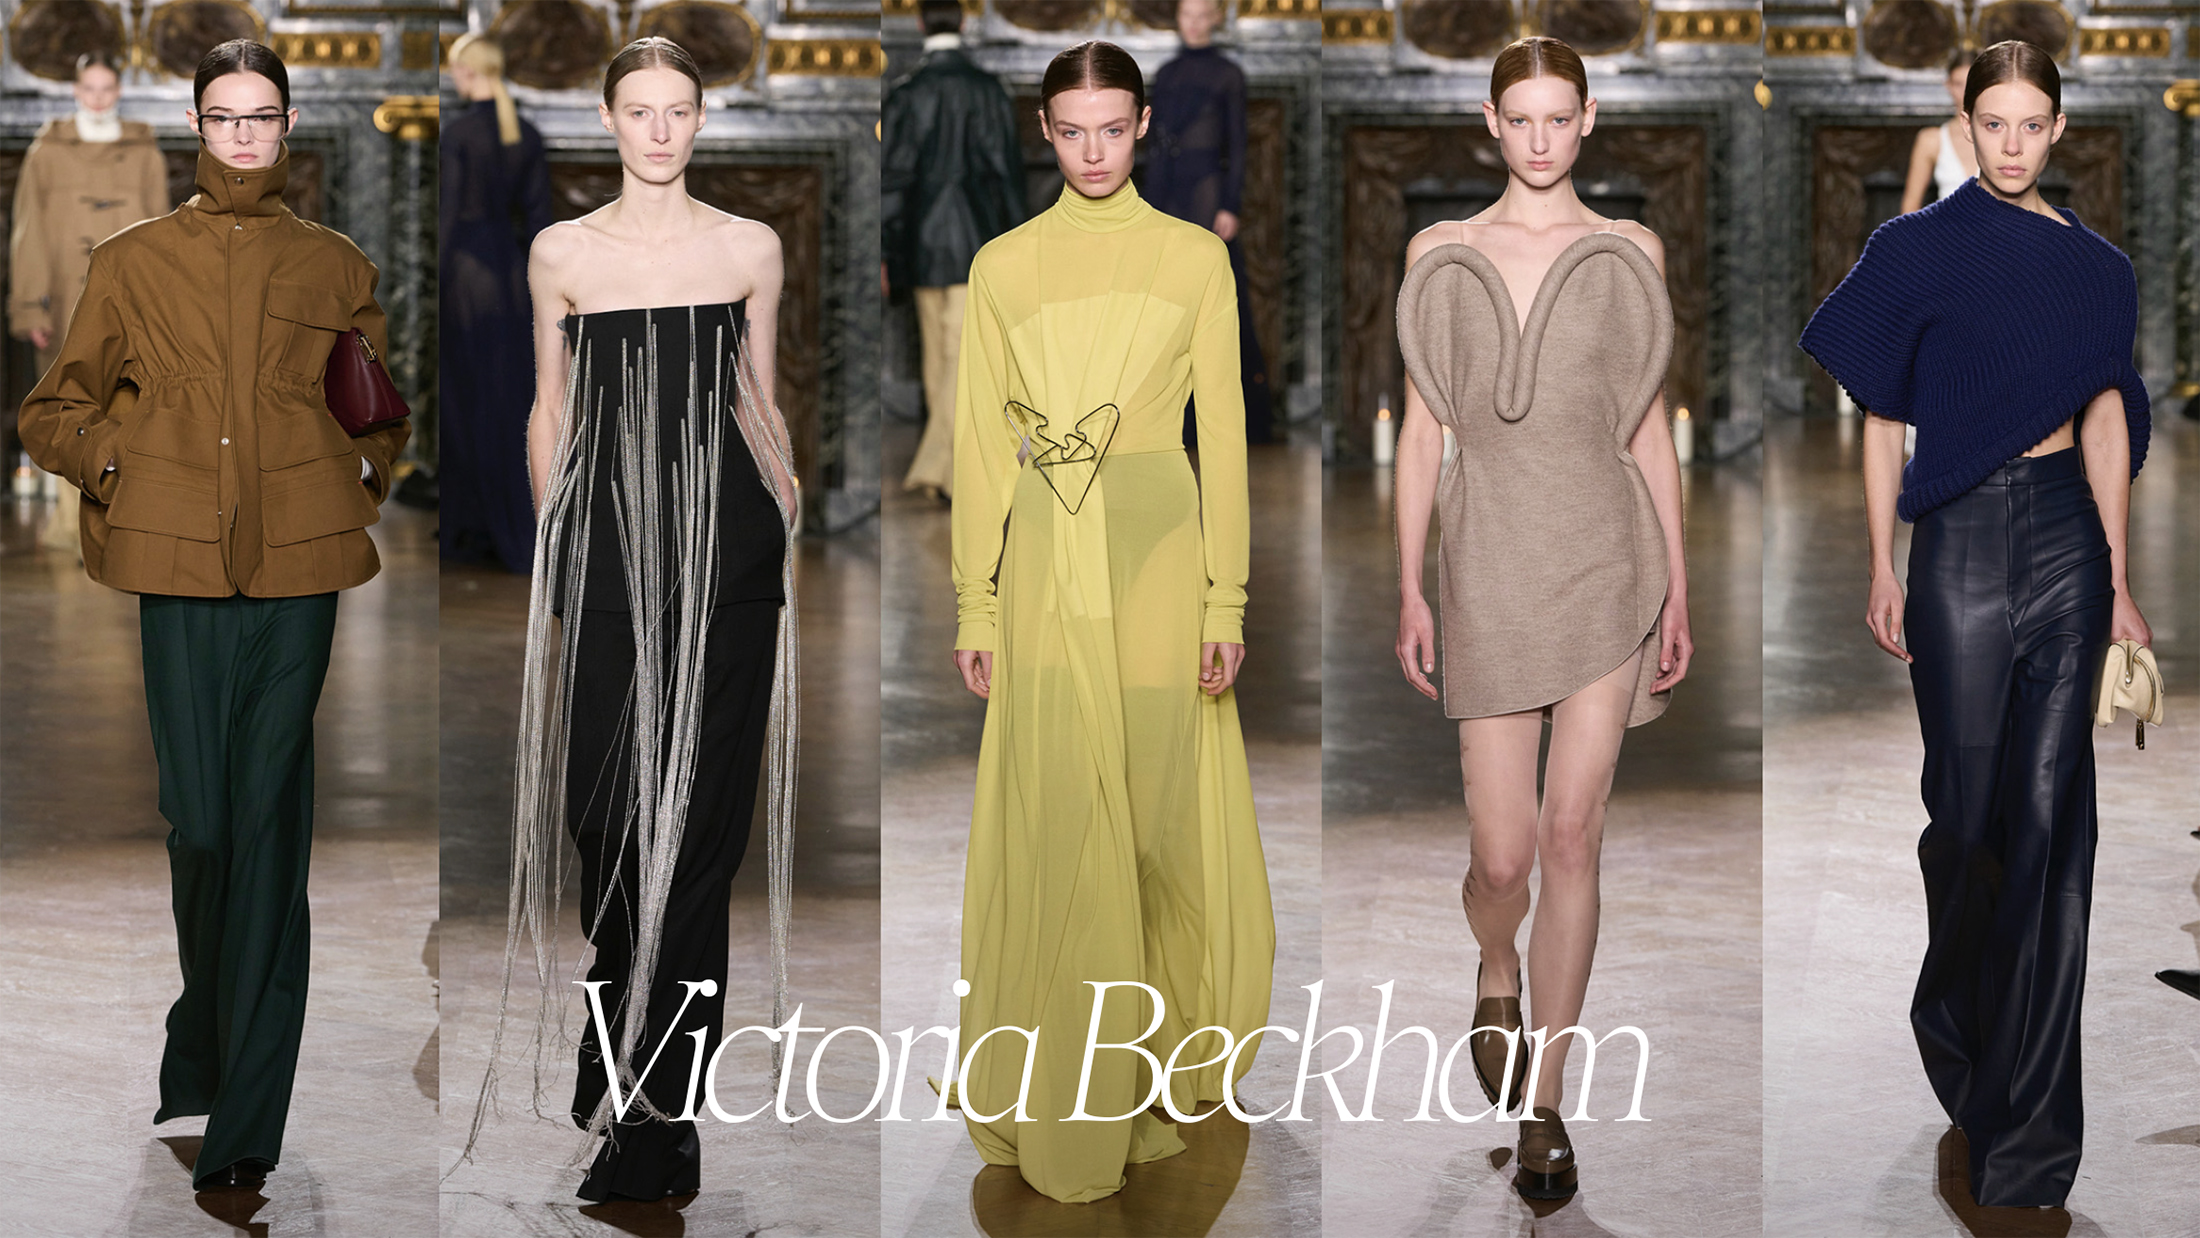 Victoria beckham Fall 2024 fashion show grid for the Top 10 Paris Fall 2024 fashion shows for the Impression